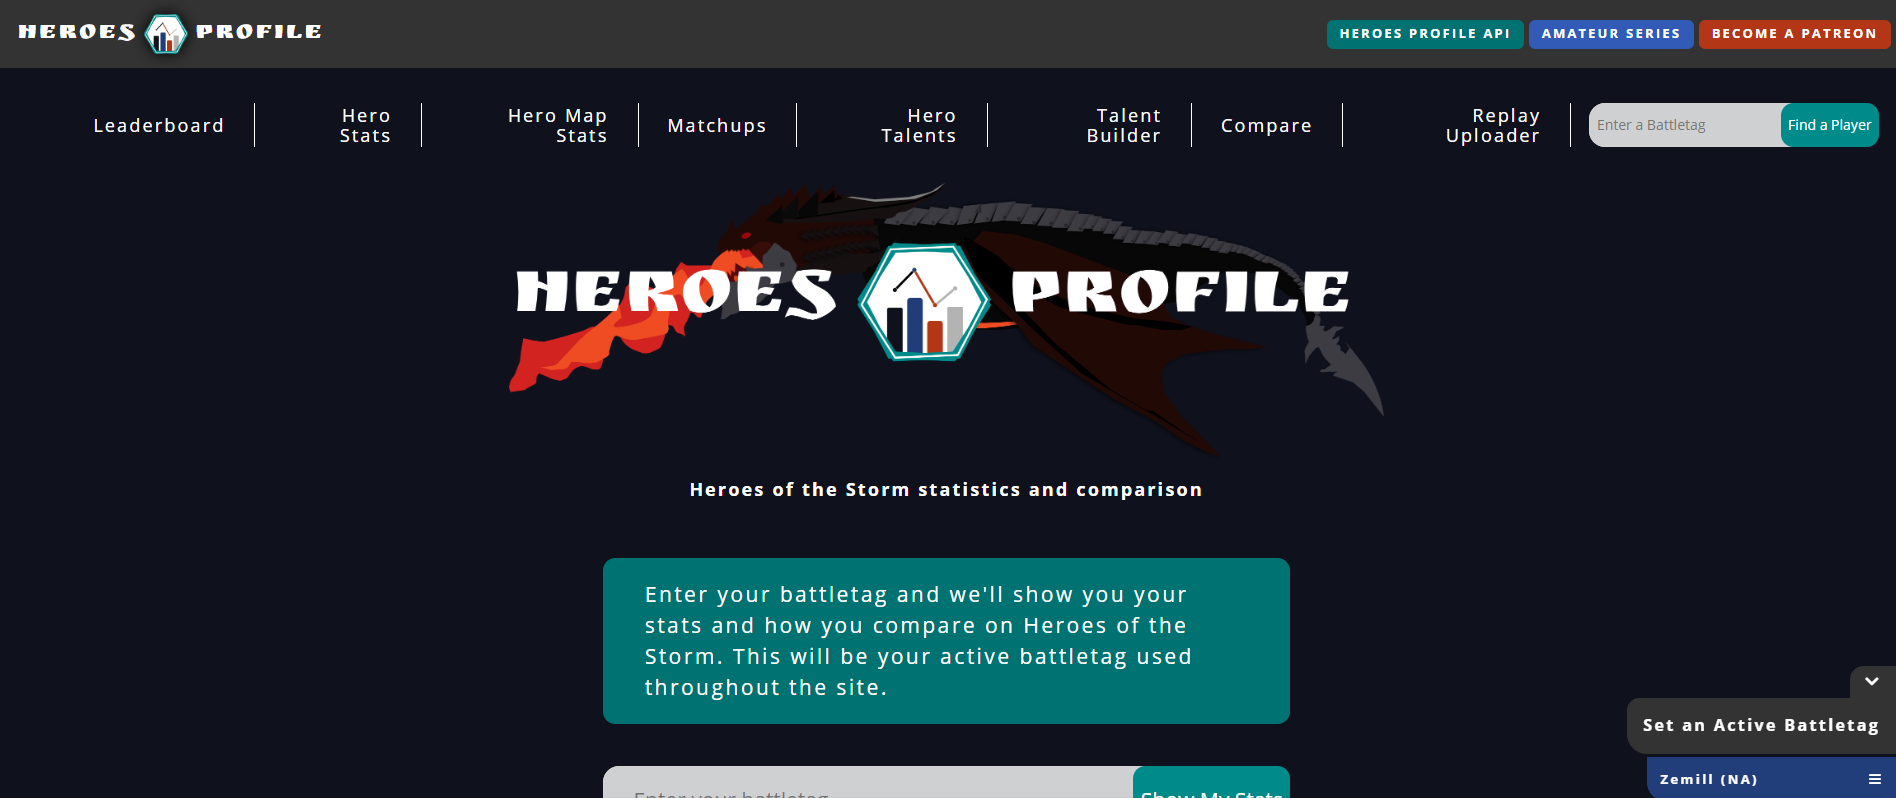 HeroesProfile.com